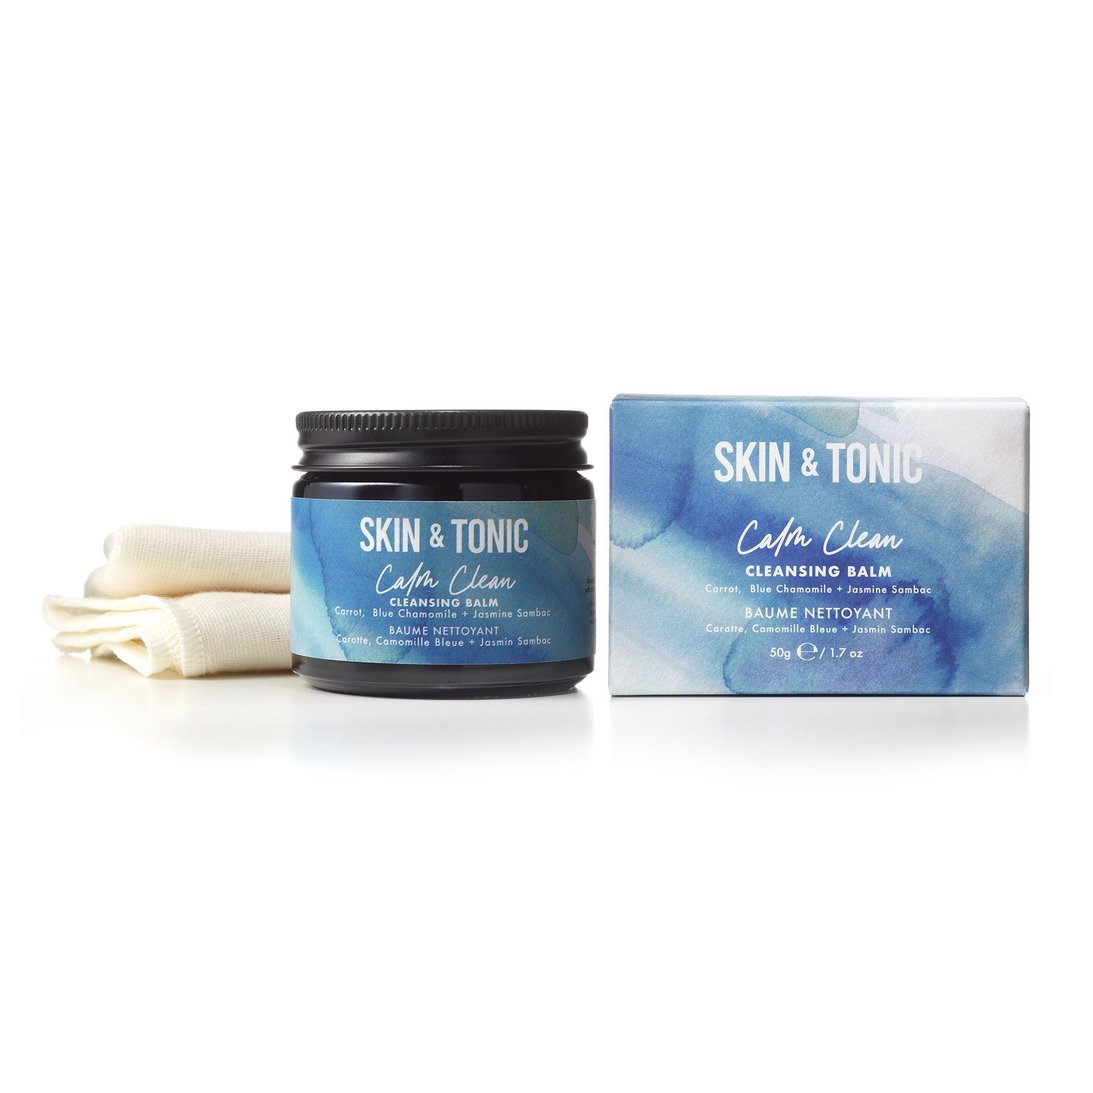 Skin & Tonic Calm Clean puhdistusbalmi